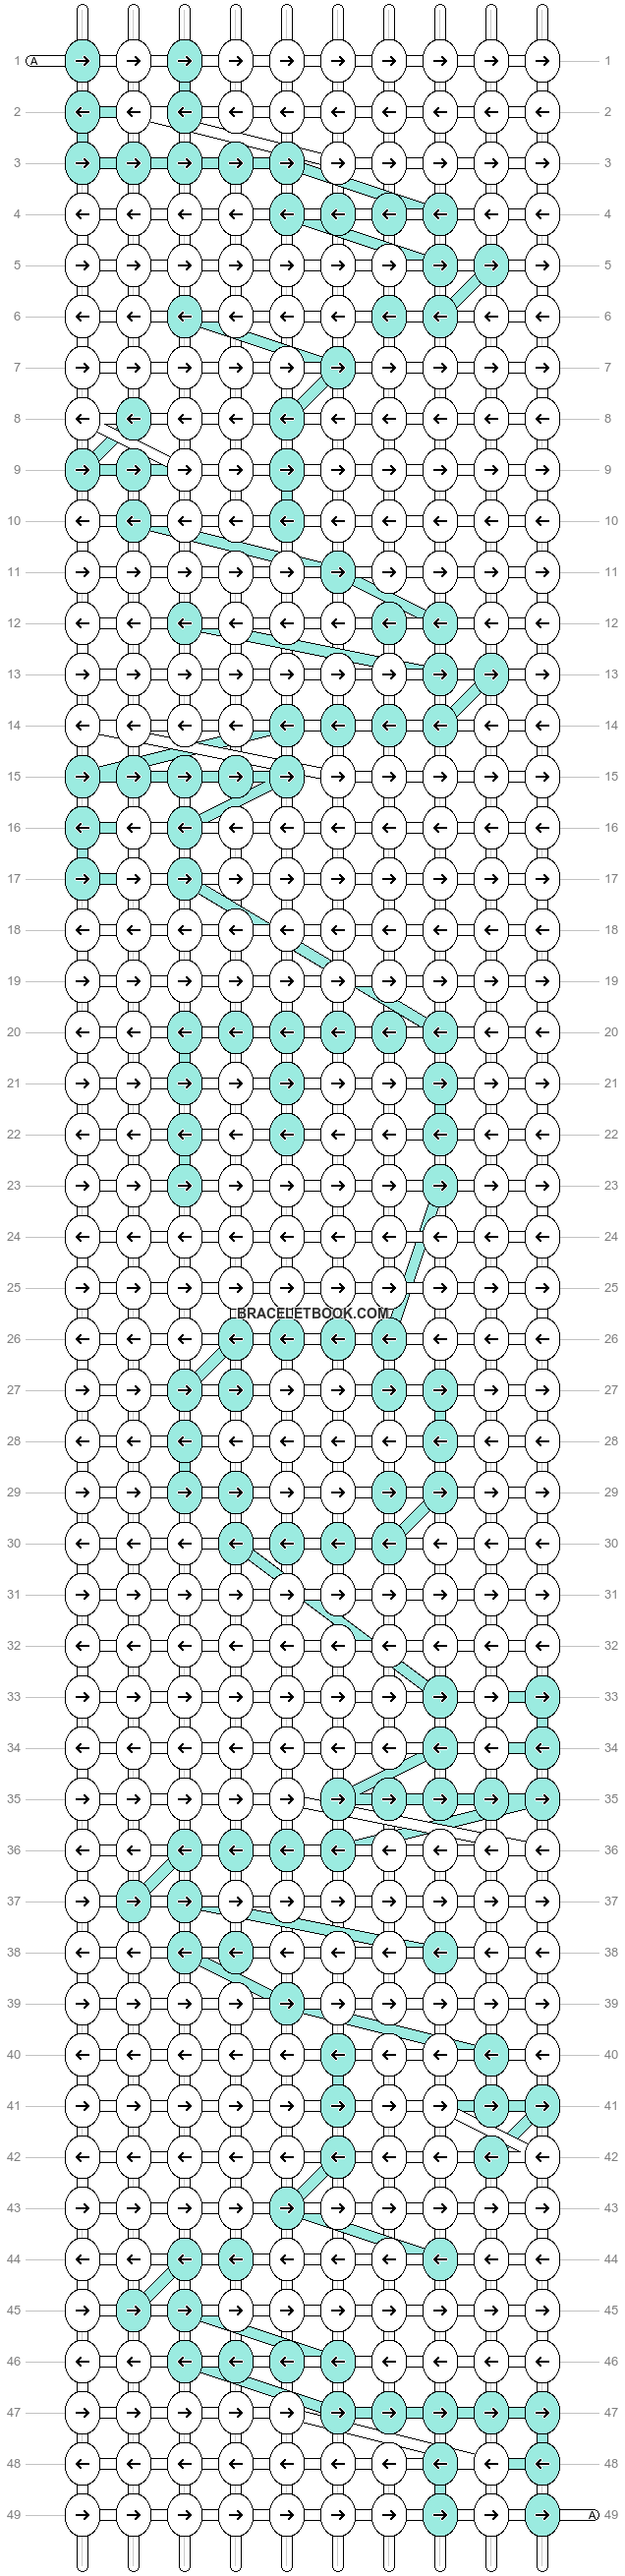 Alpha pattern #29169 variation #75266 pattern